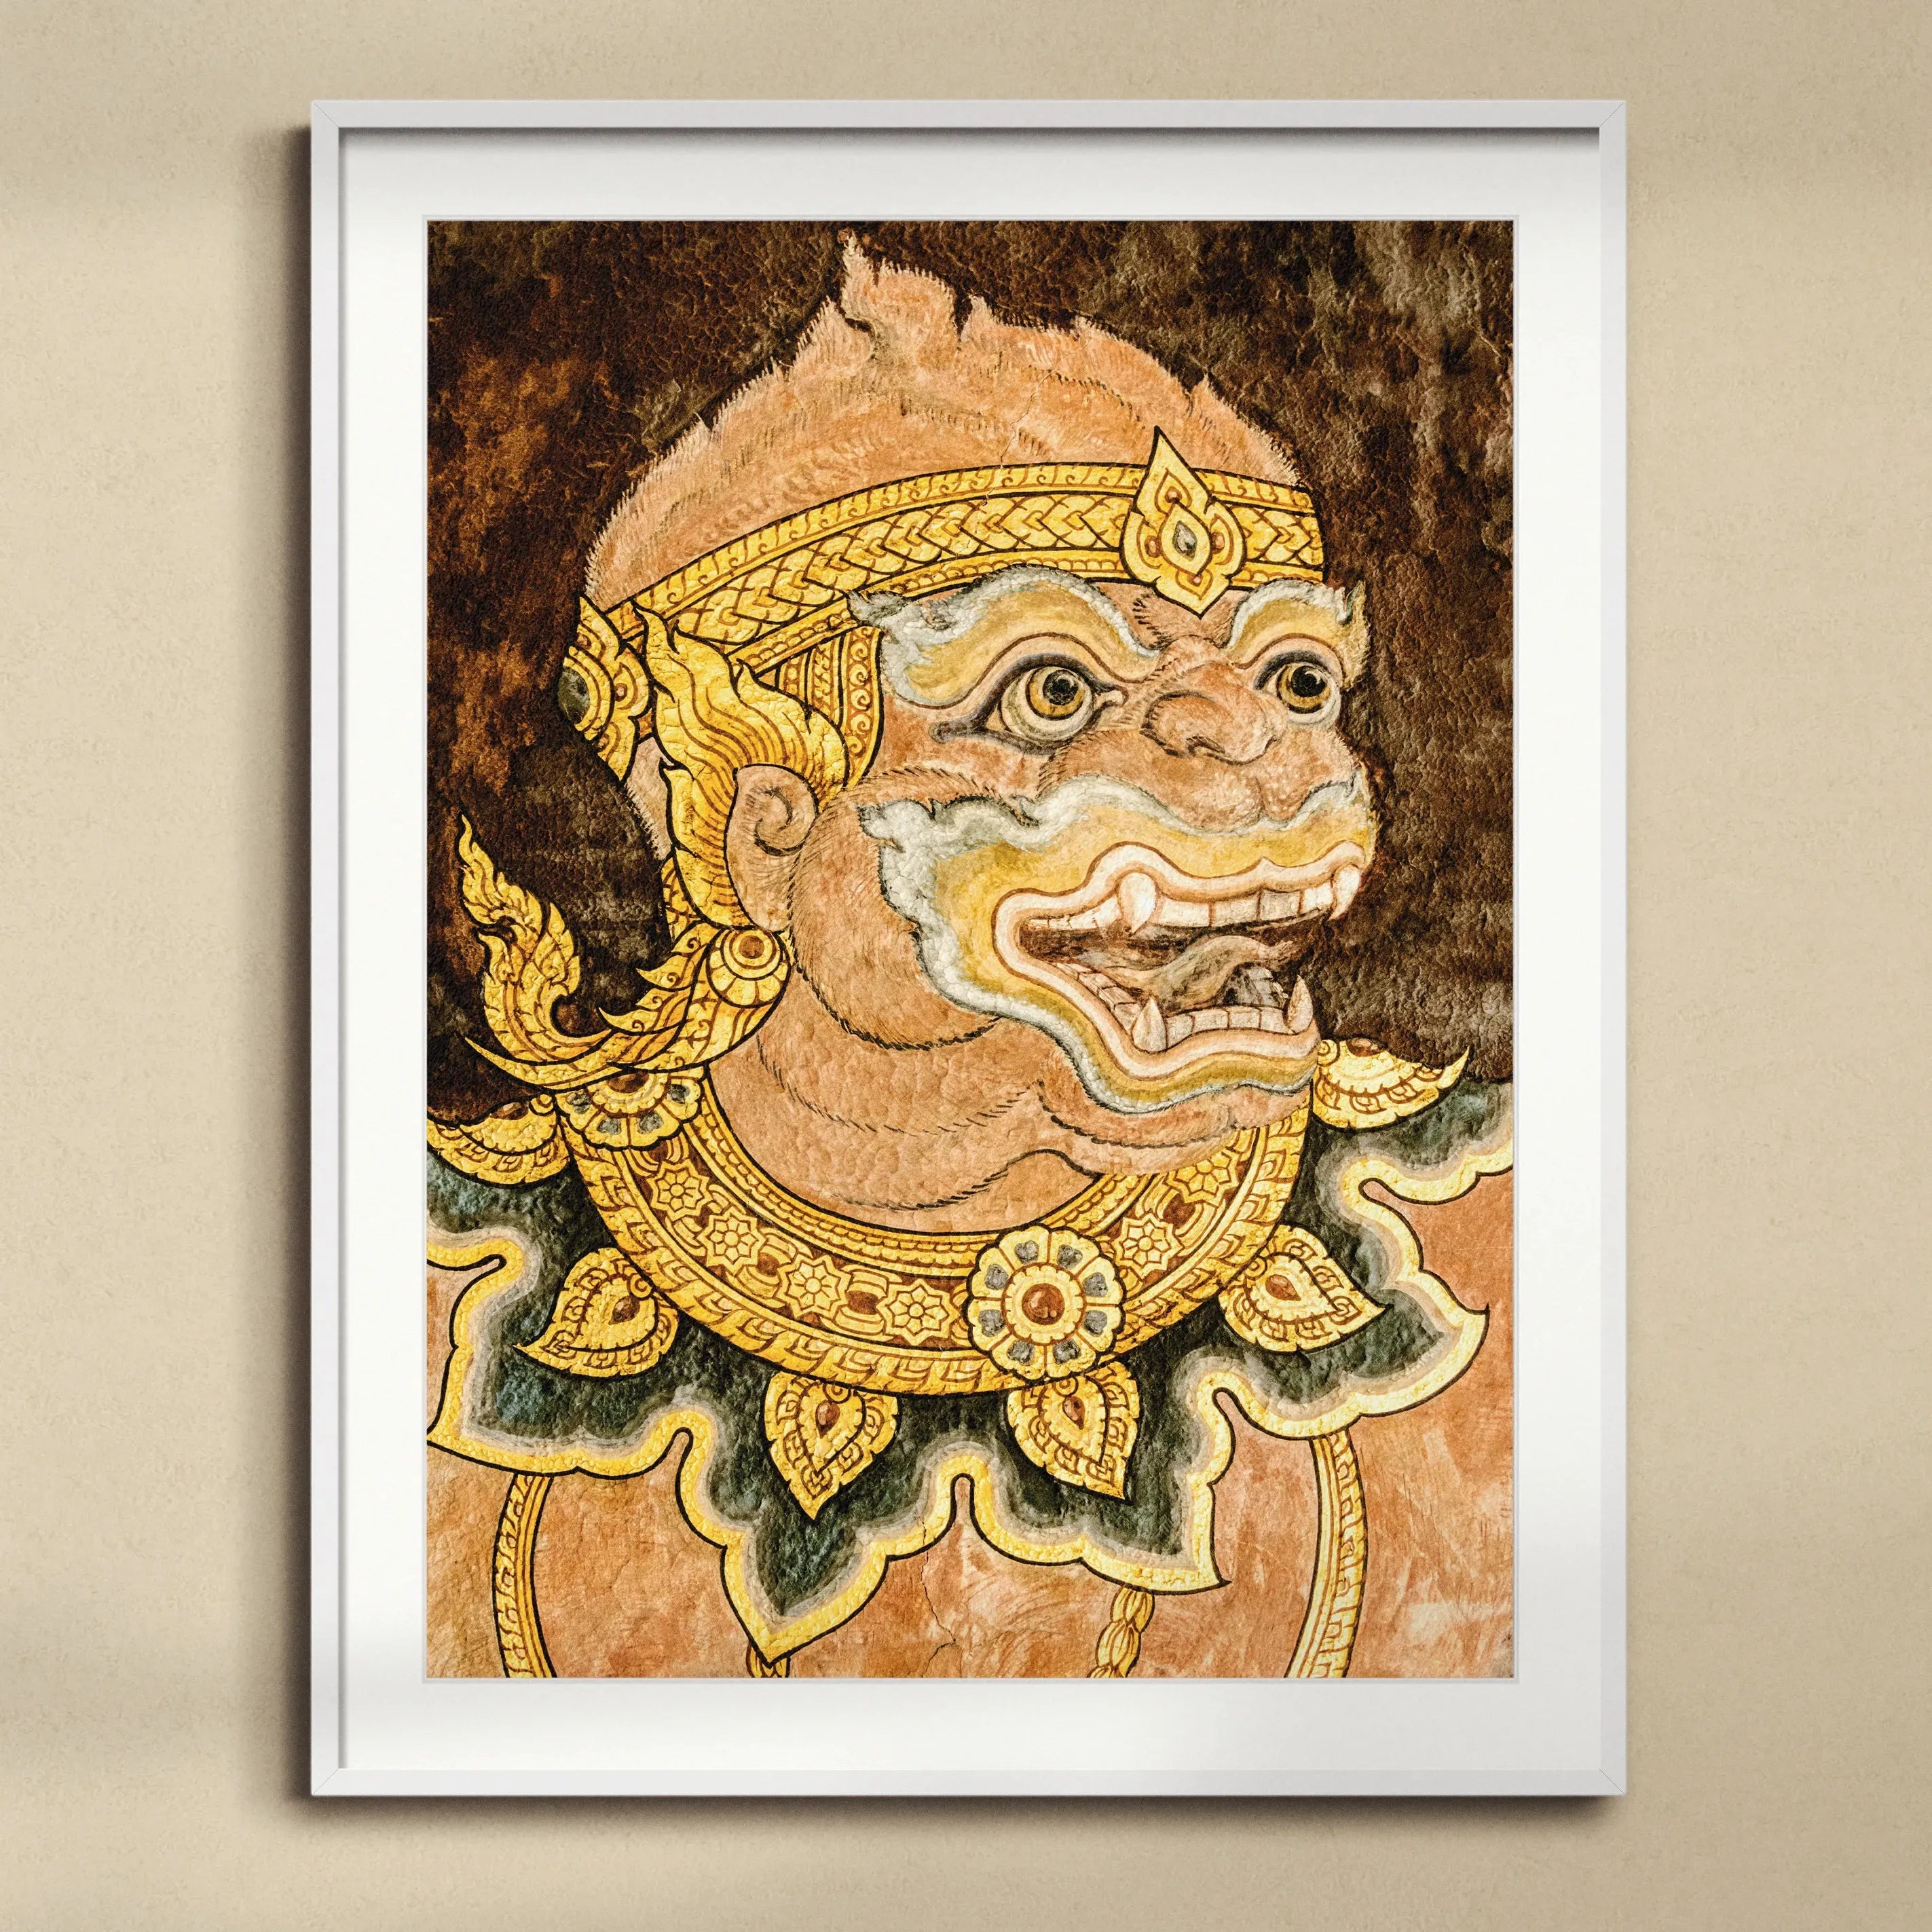 Monkey See Framed & Mounted Print - Posters Prints & Visual Artwork - Aesthetic Art